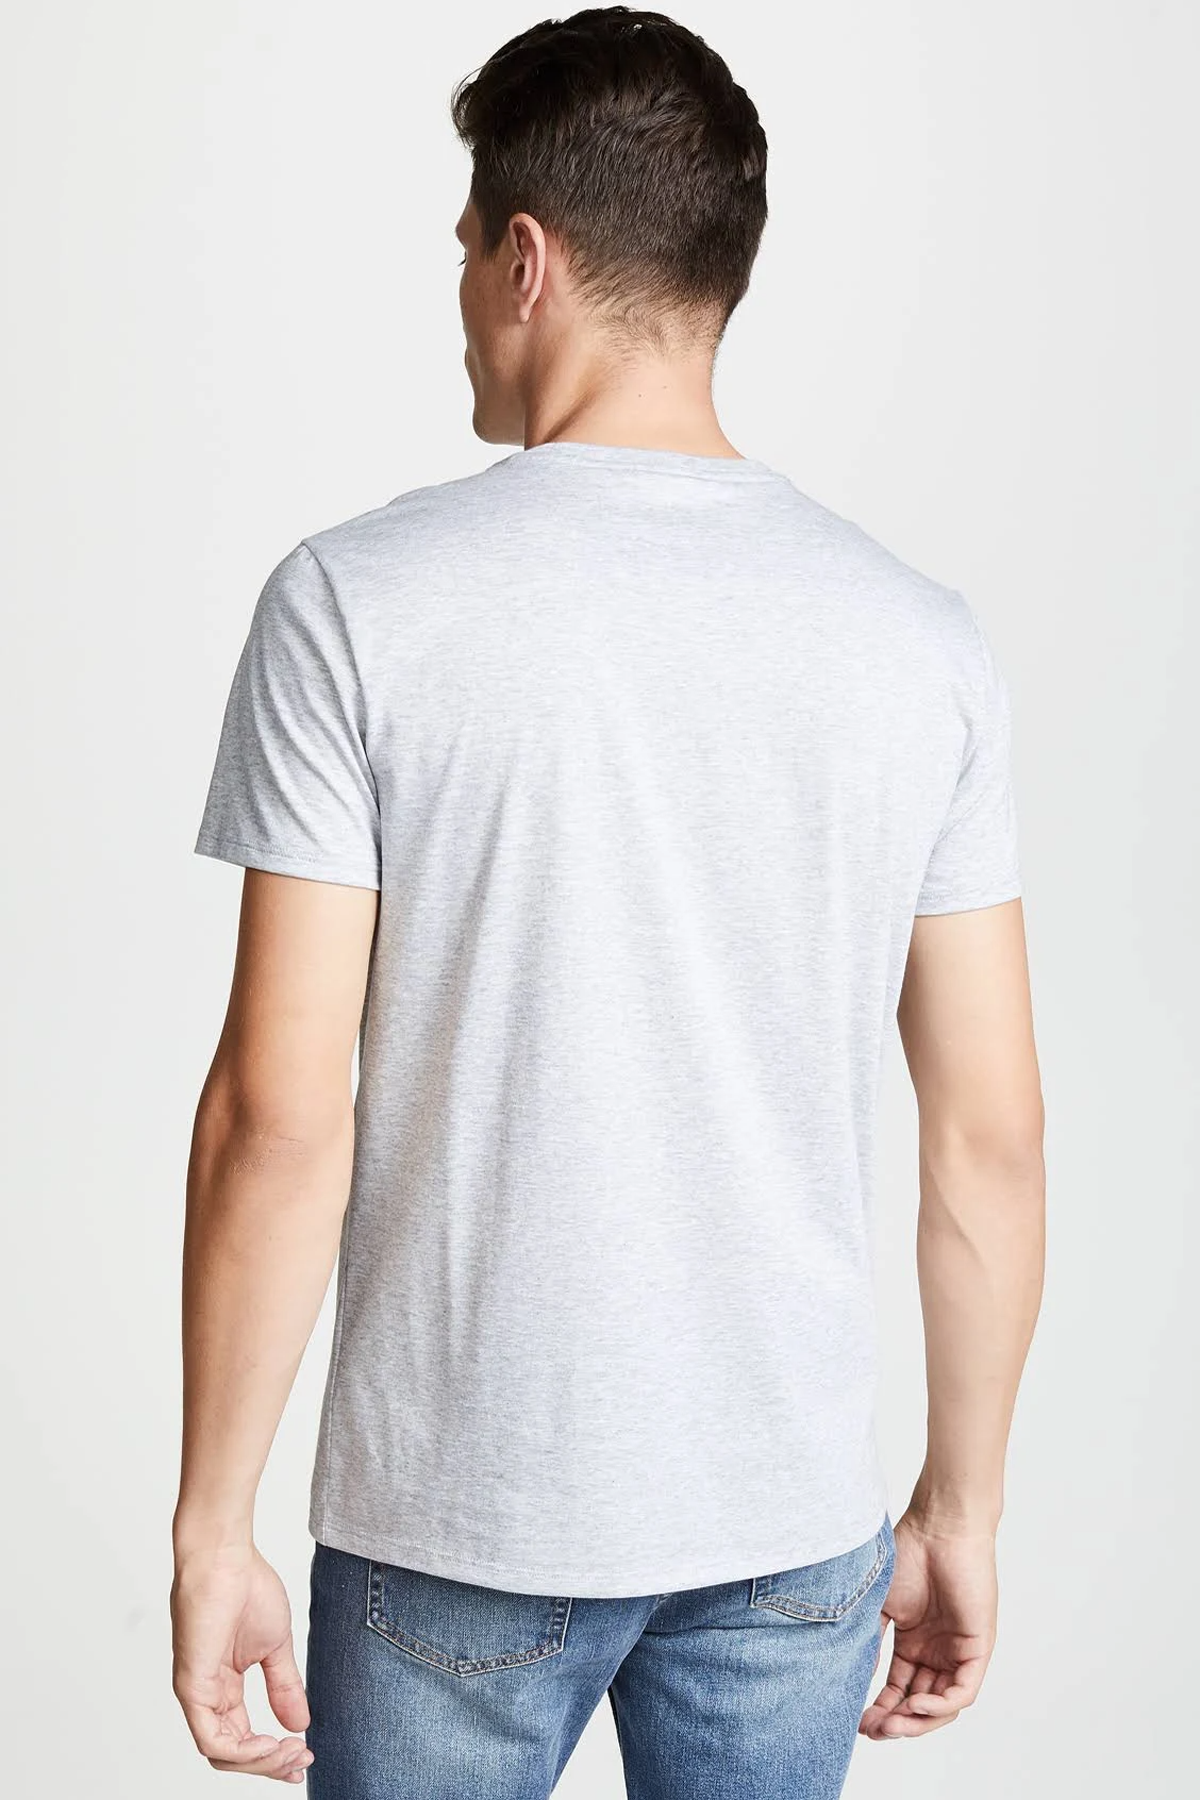 Custom Lacoste Mens Pima Cotton T Shirt TH6709 Silver